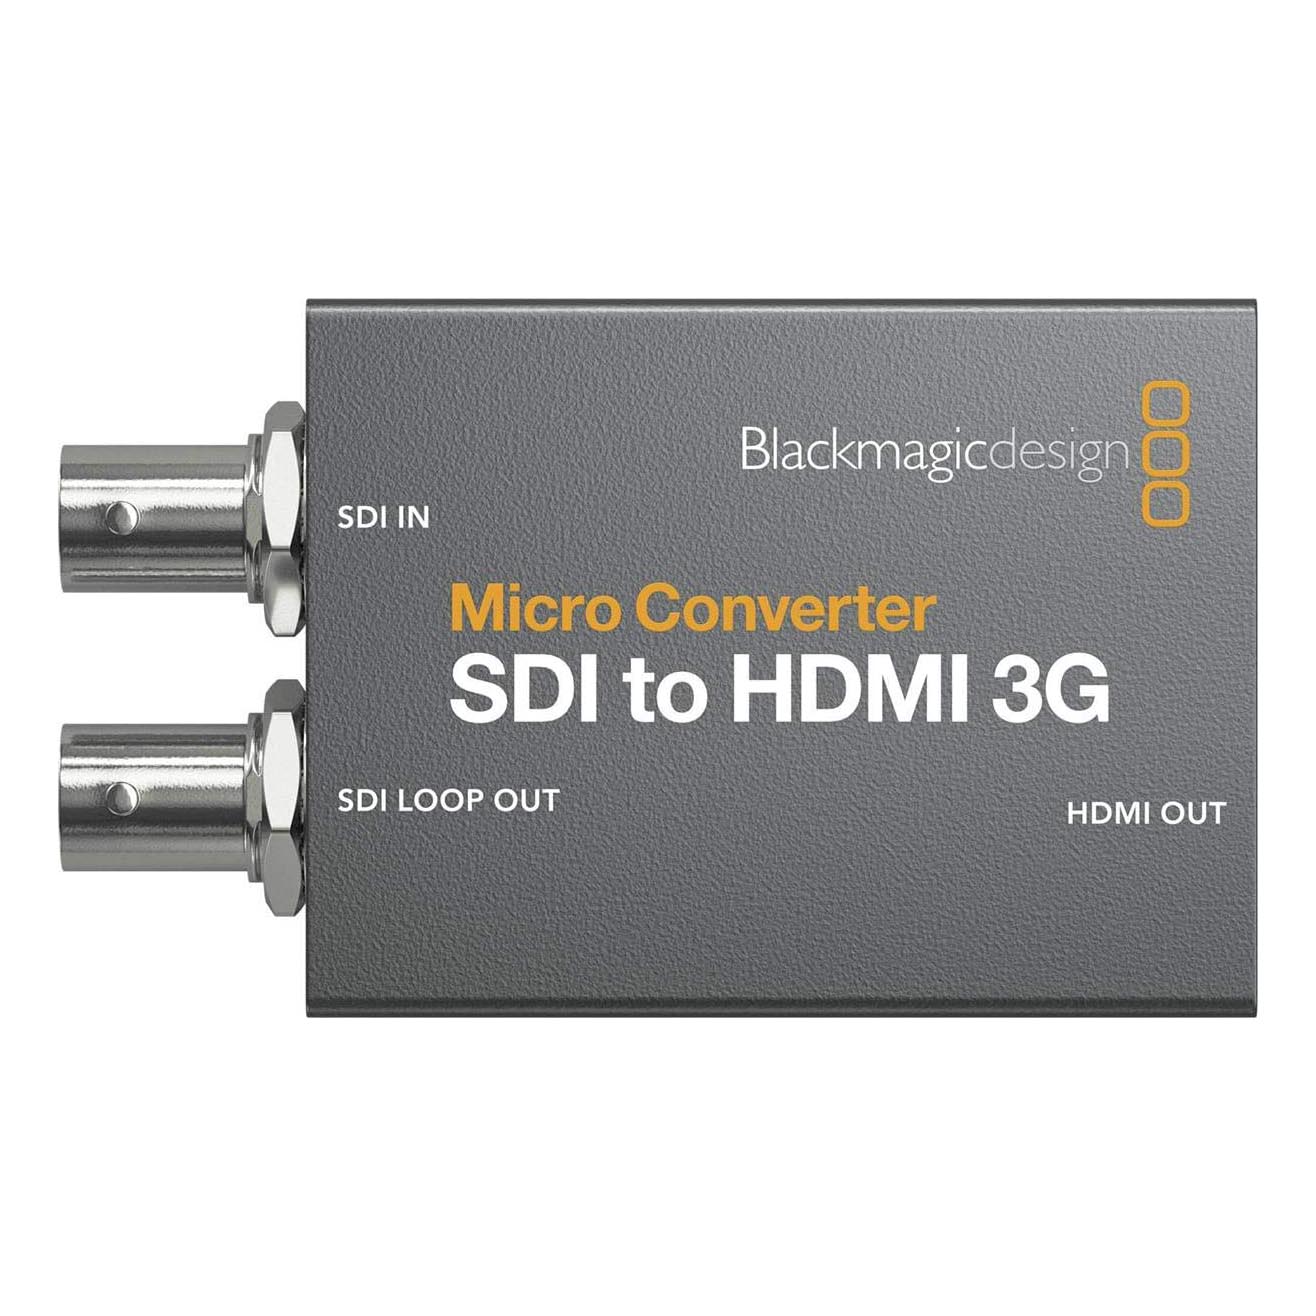 micro converter sdi to hdmi 3g микро конвертер Конвертер Blackmagic Design Micro Converter SDI to HDMI 3G PSU